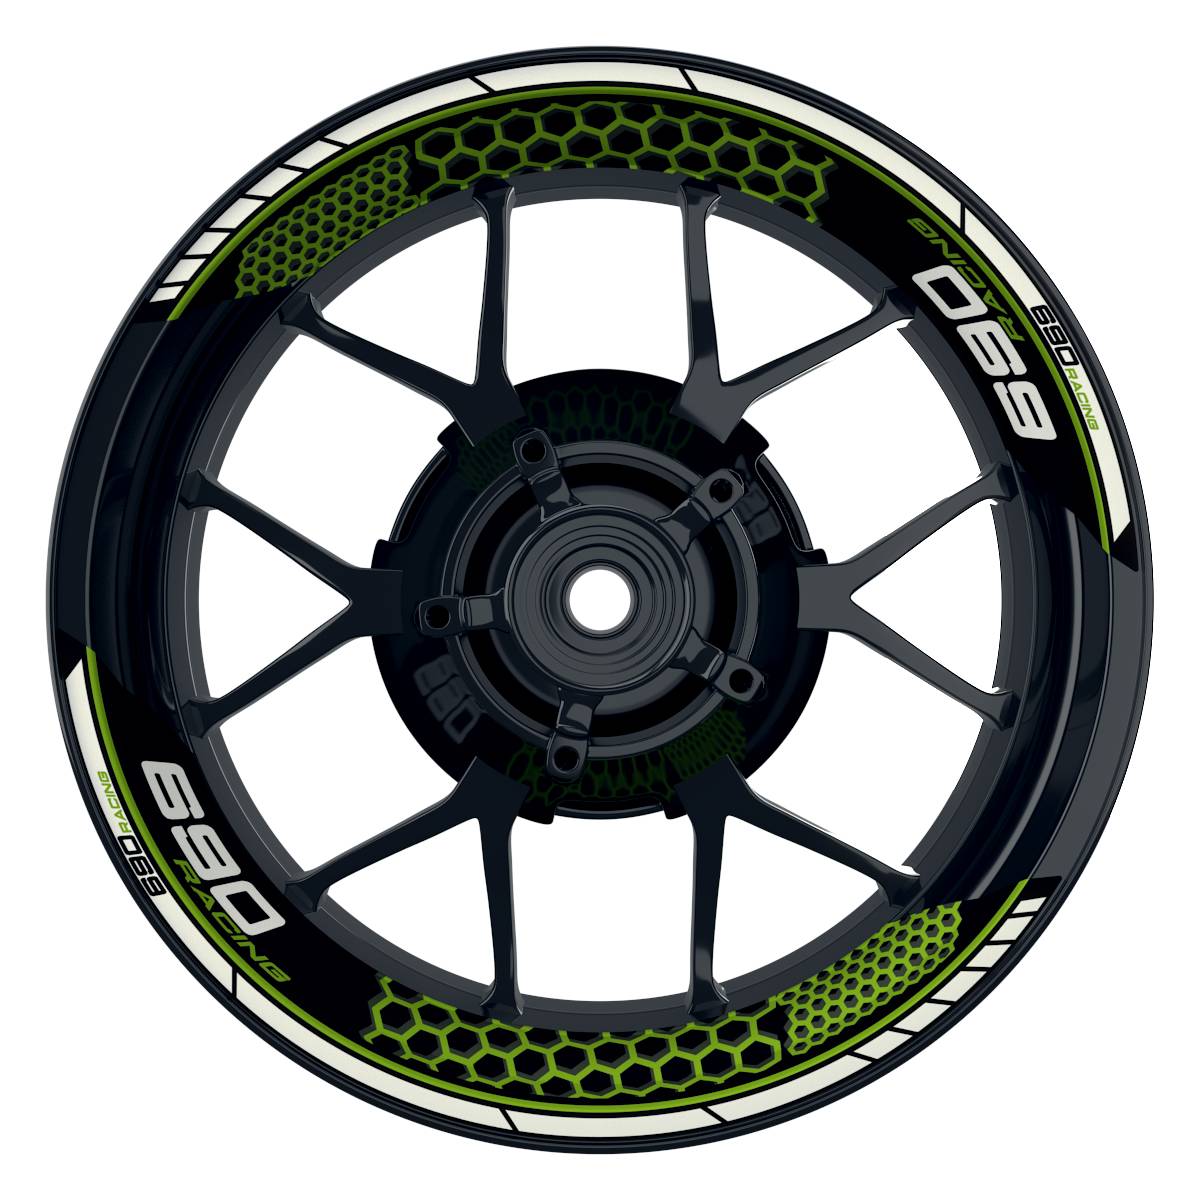 KTM Racing 690 Hexagon schwarz gruen Frontansicht